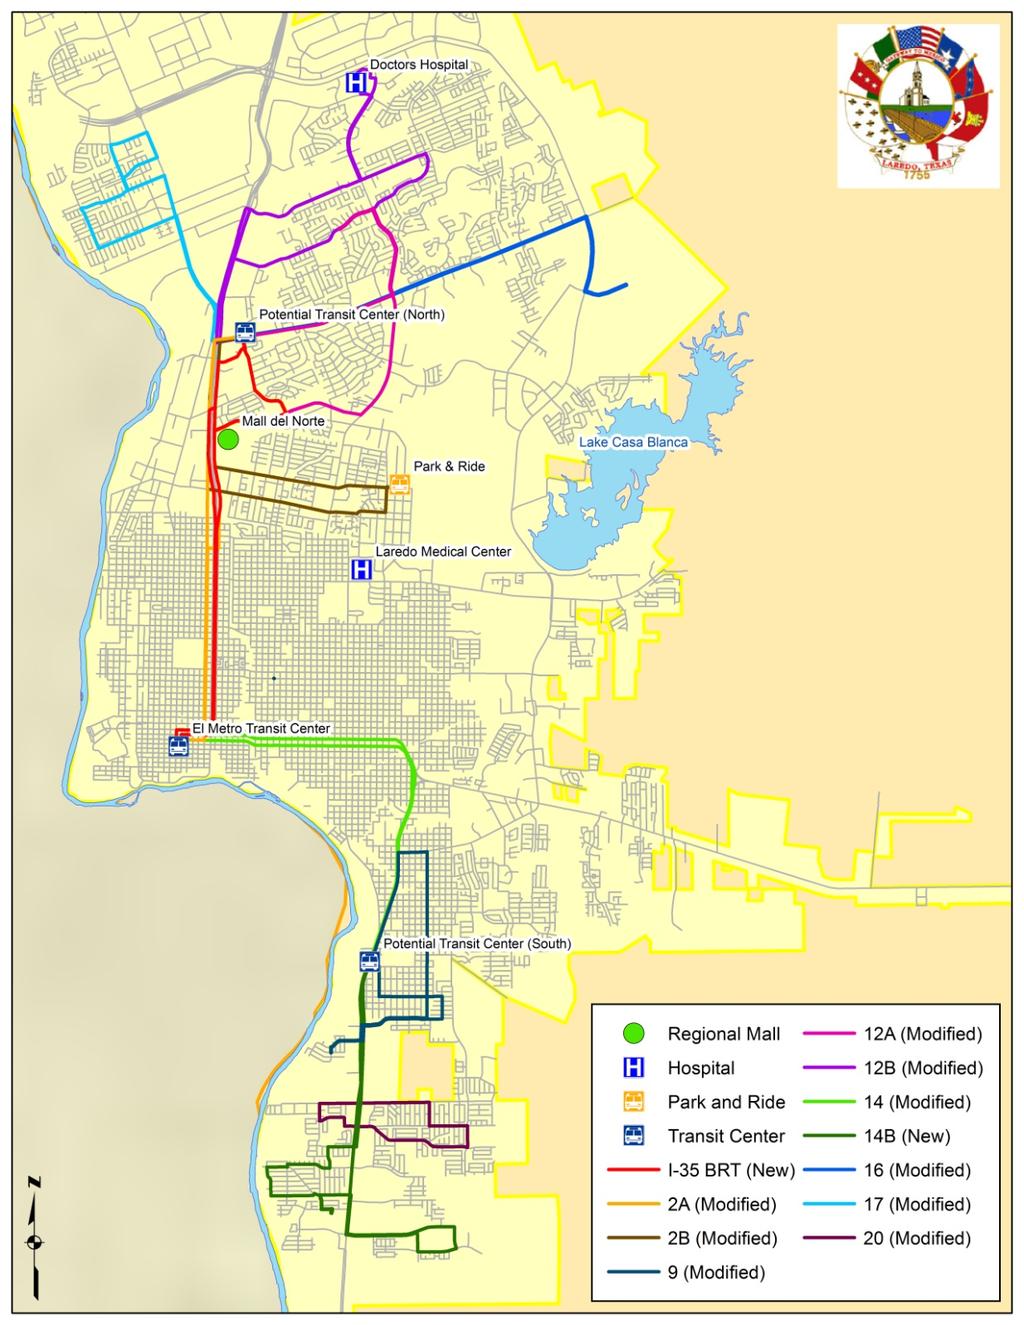 Figure 6: Scenario 1 Modified Bus Routes